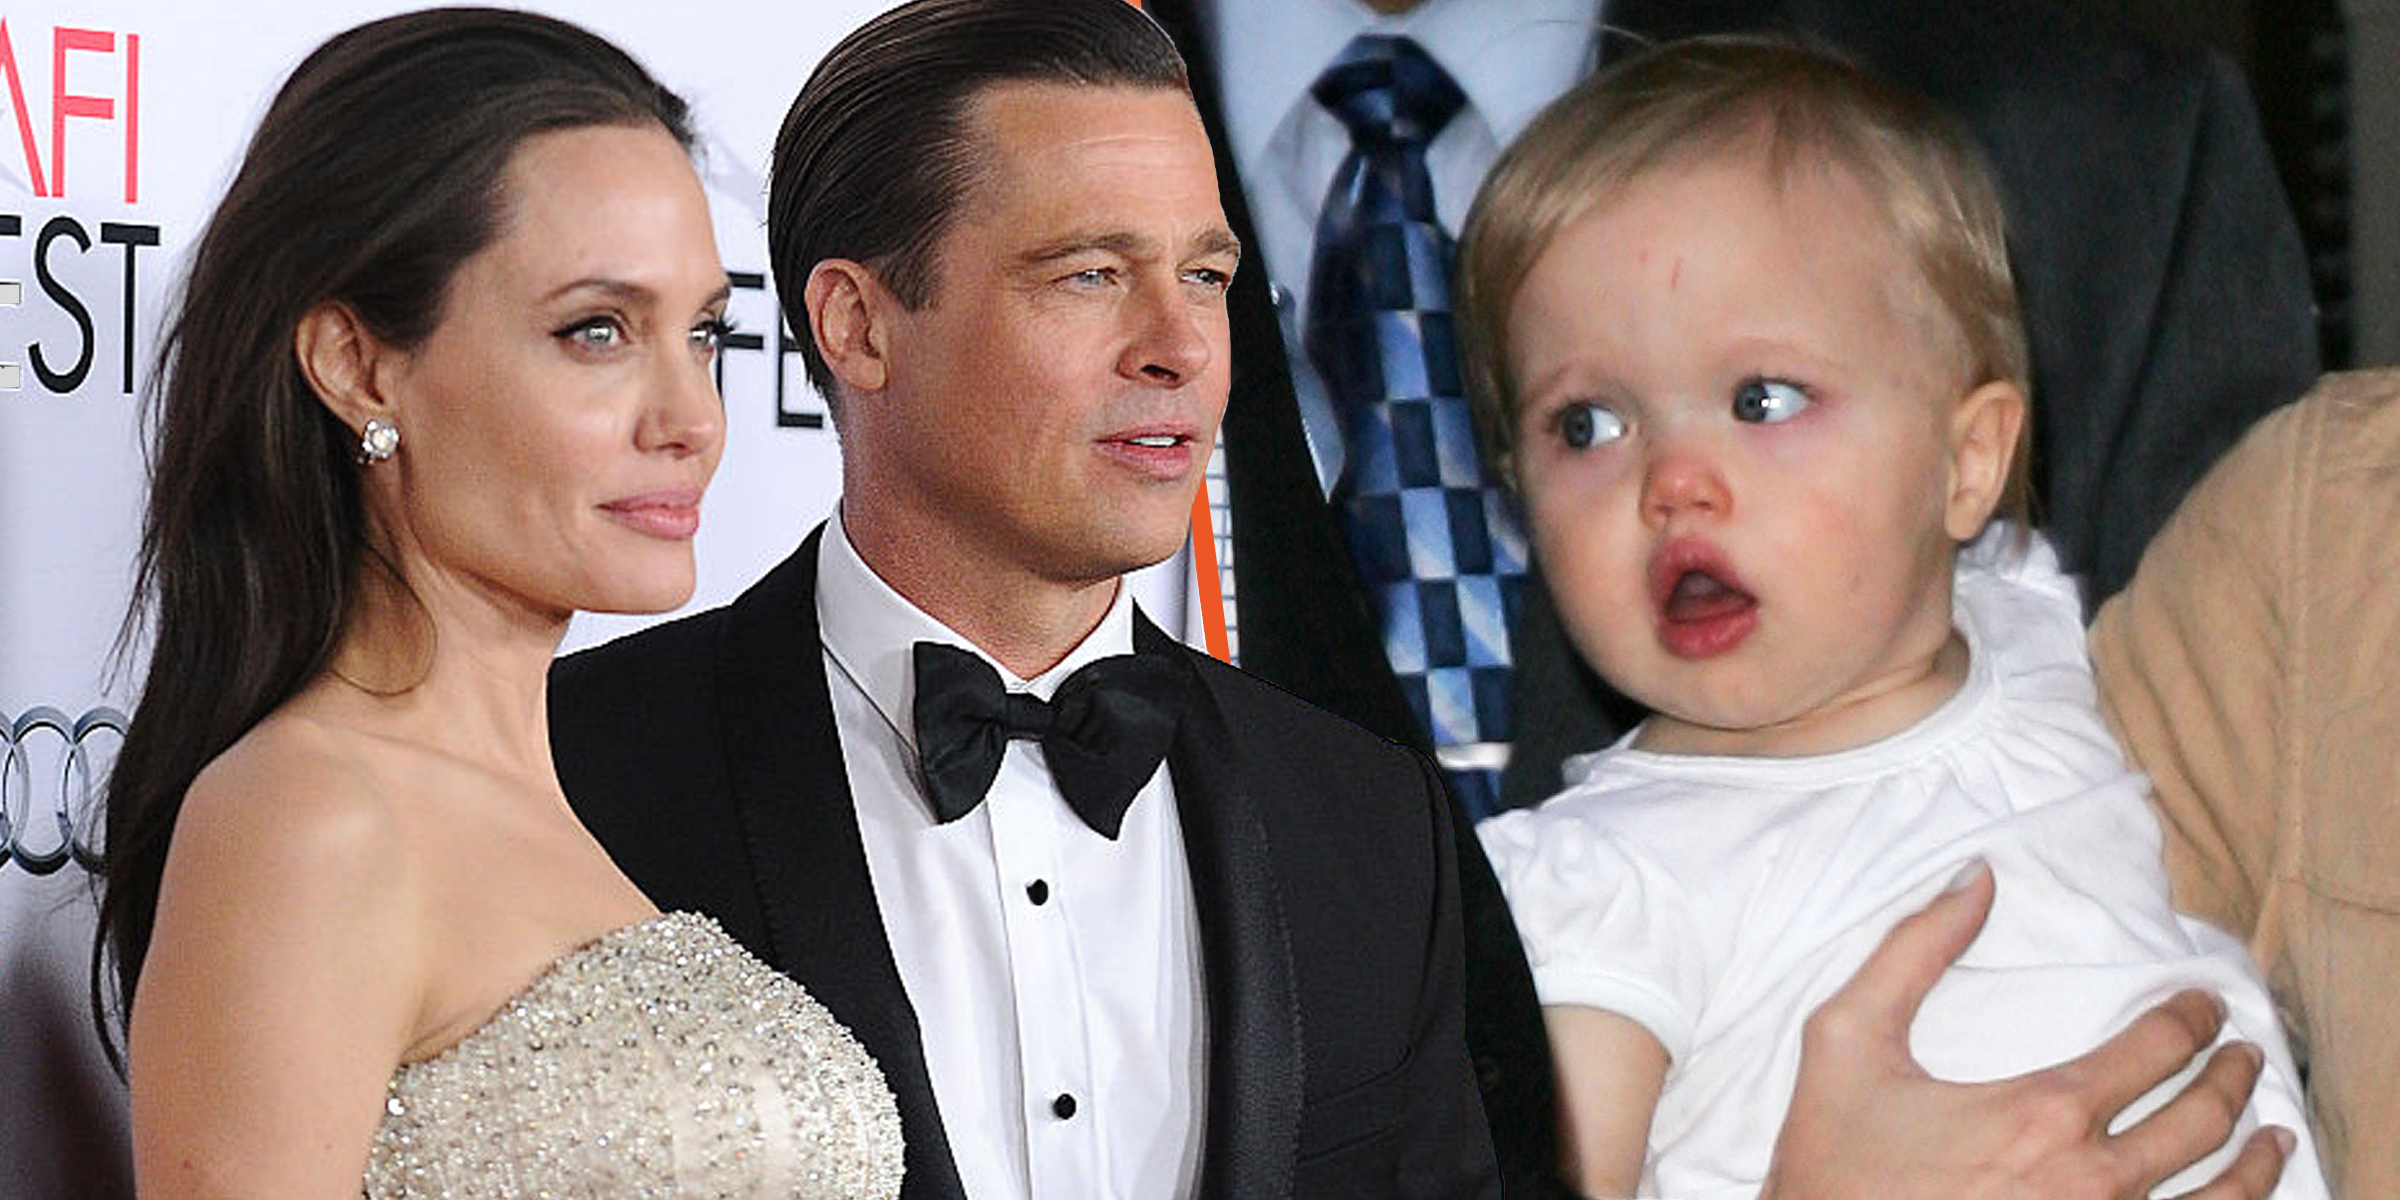 Angelina Jolie and Brad Pitt | Shiloh Jolie-Pitt | Source: Getty Images